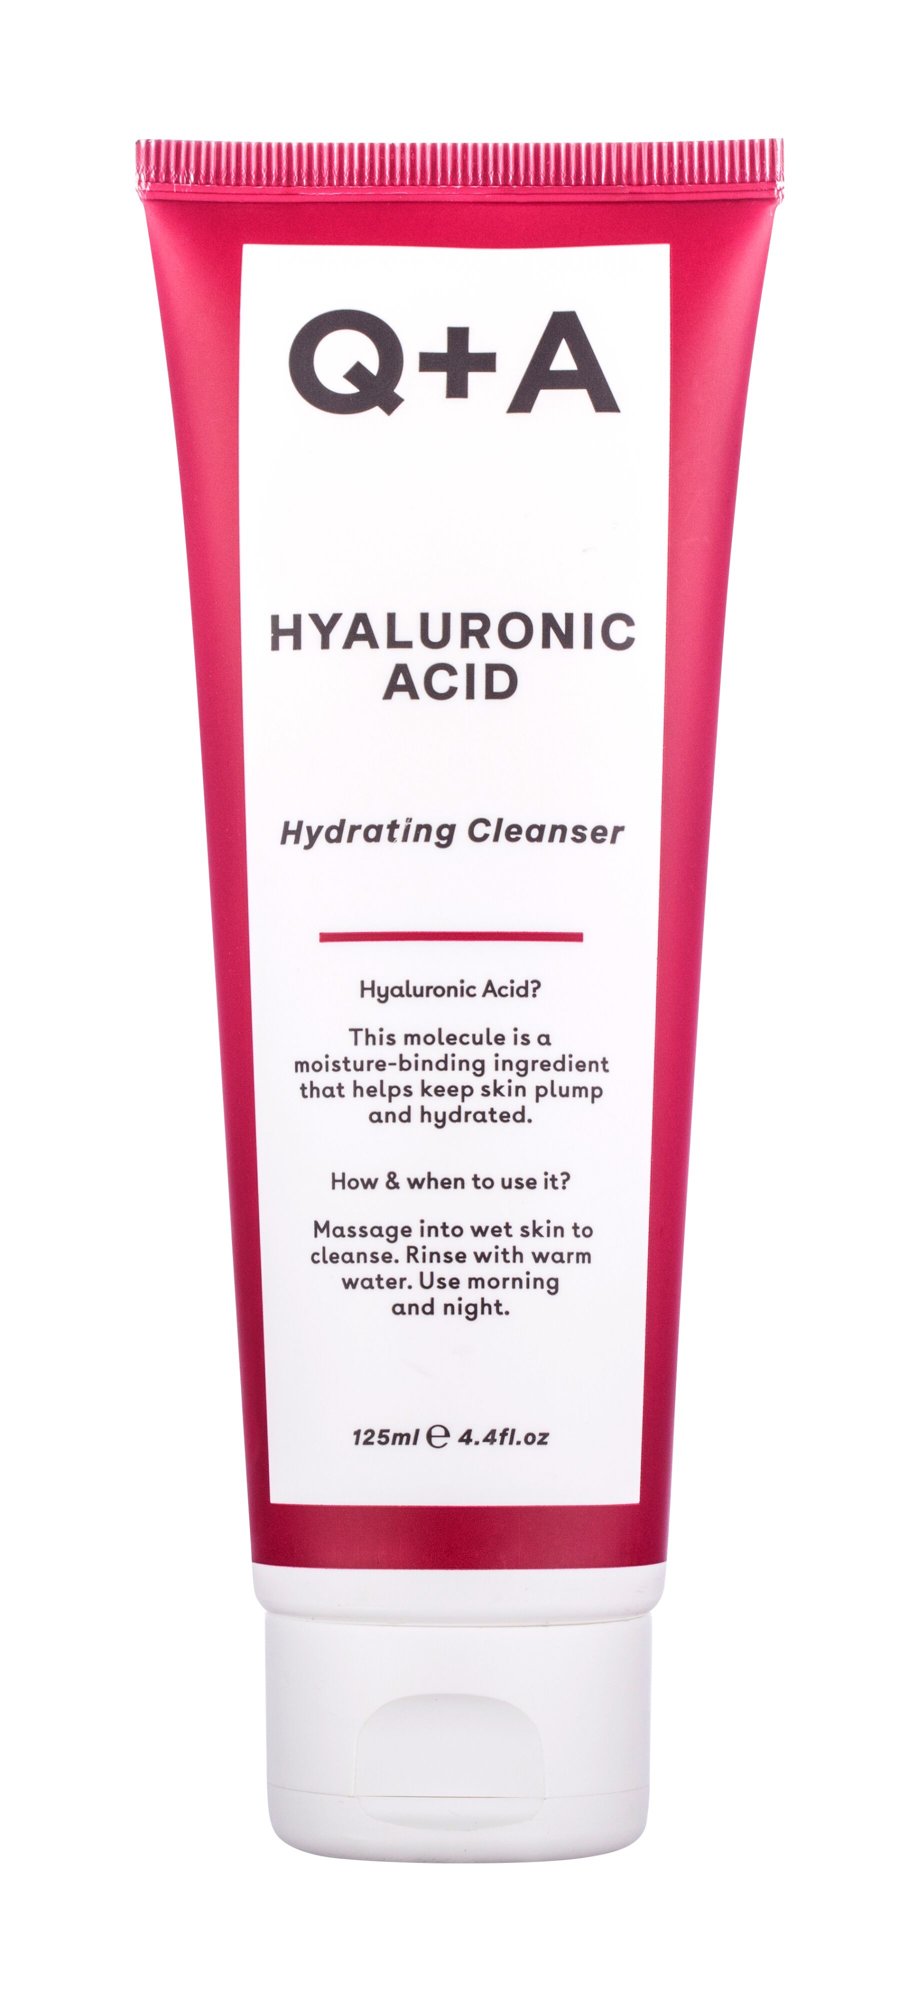 Q+A Hyaluronic Acid Hydrating Cleanser veido gelis